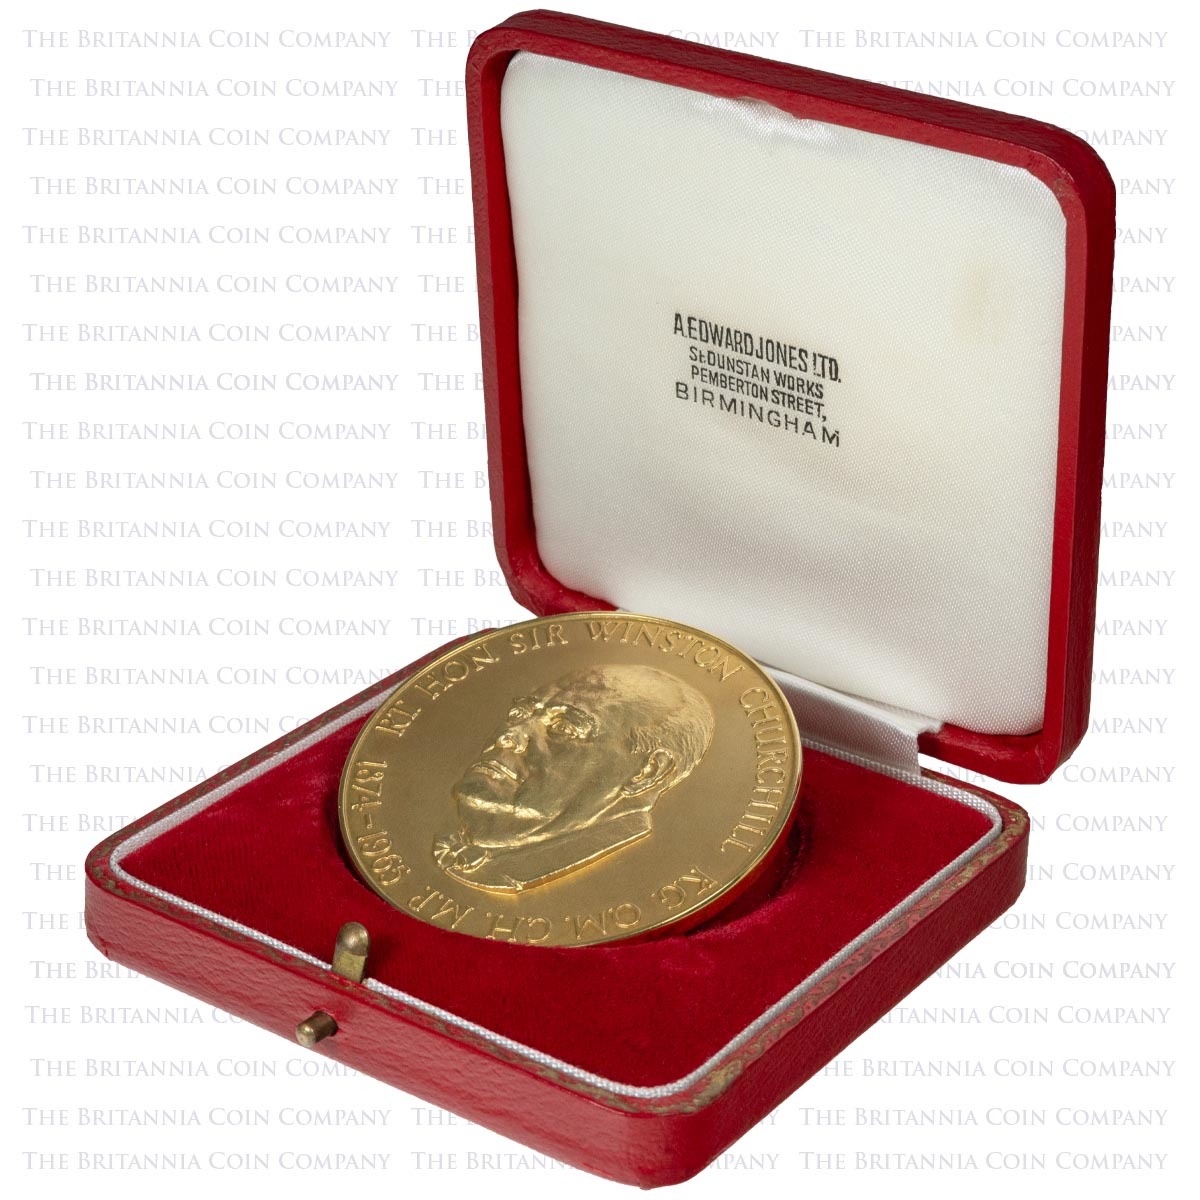 1965 Sir Winston Churchill Commemorative Gold Medal A Edward Jones Boxed